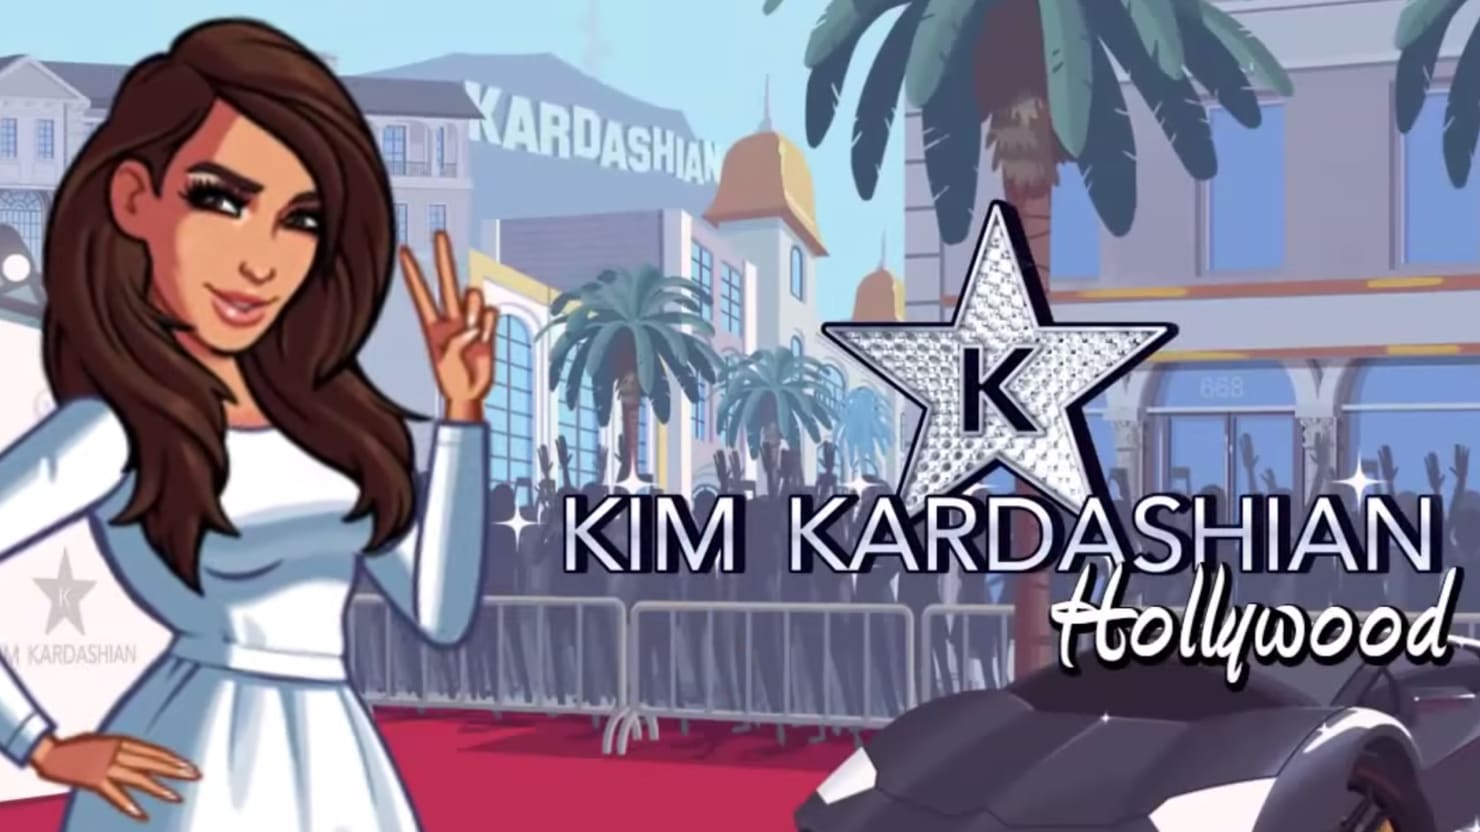 Inside ‘kim Kardashian Hollywood’ The Reality Star’s